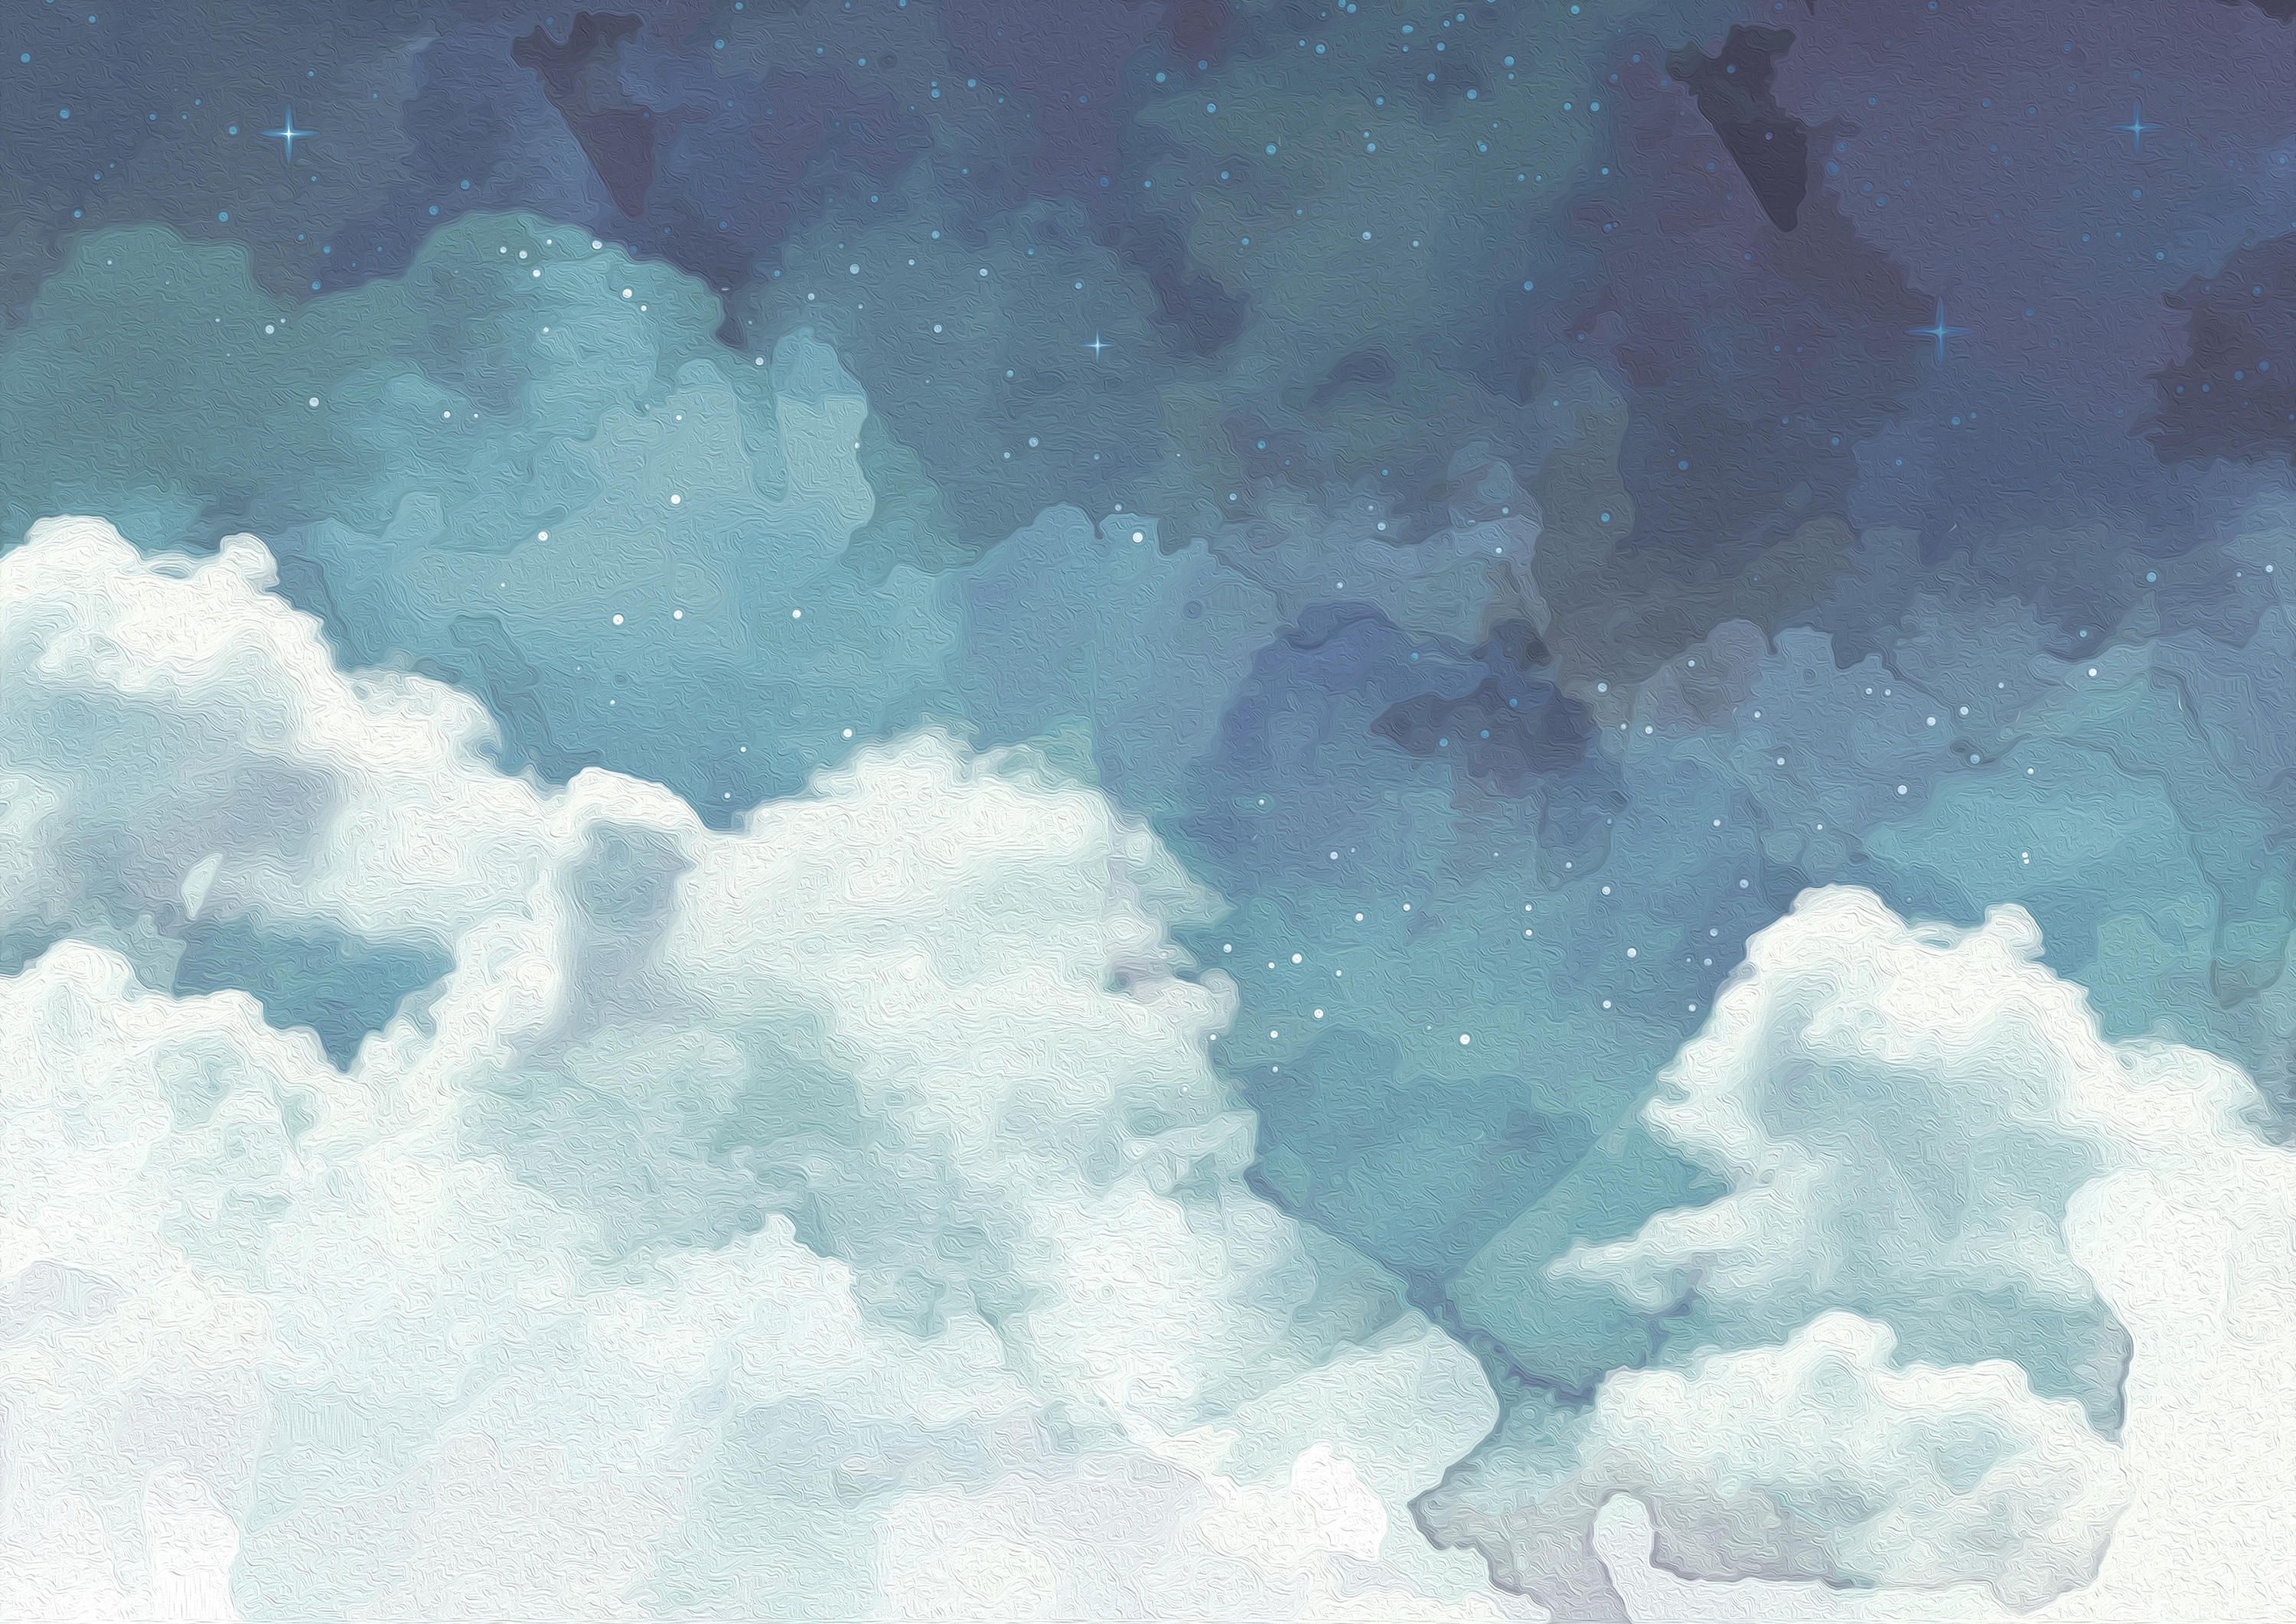 Cloudy Night Sky Wallpaper. Etsy. Night sky wallpaper, Cloudy nights, Laptop wallpaper